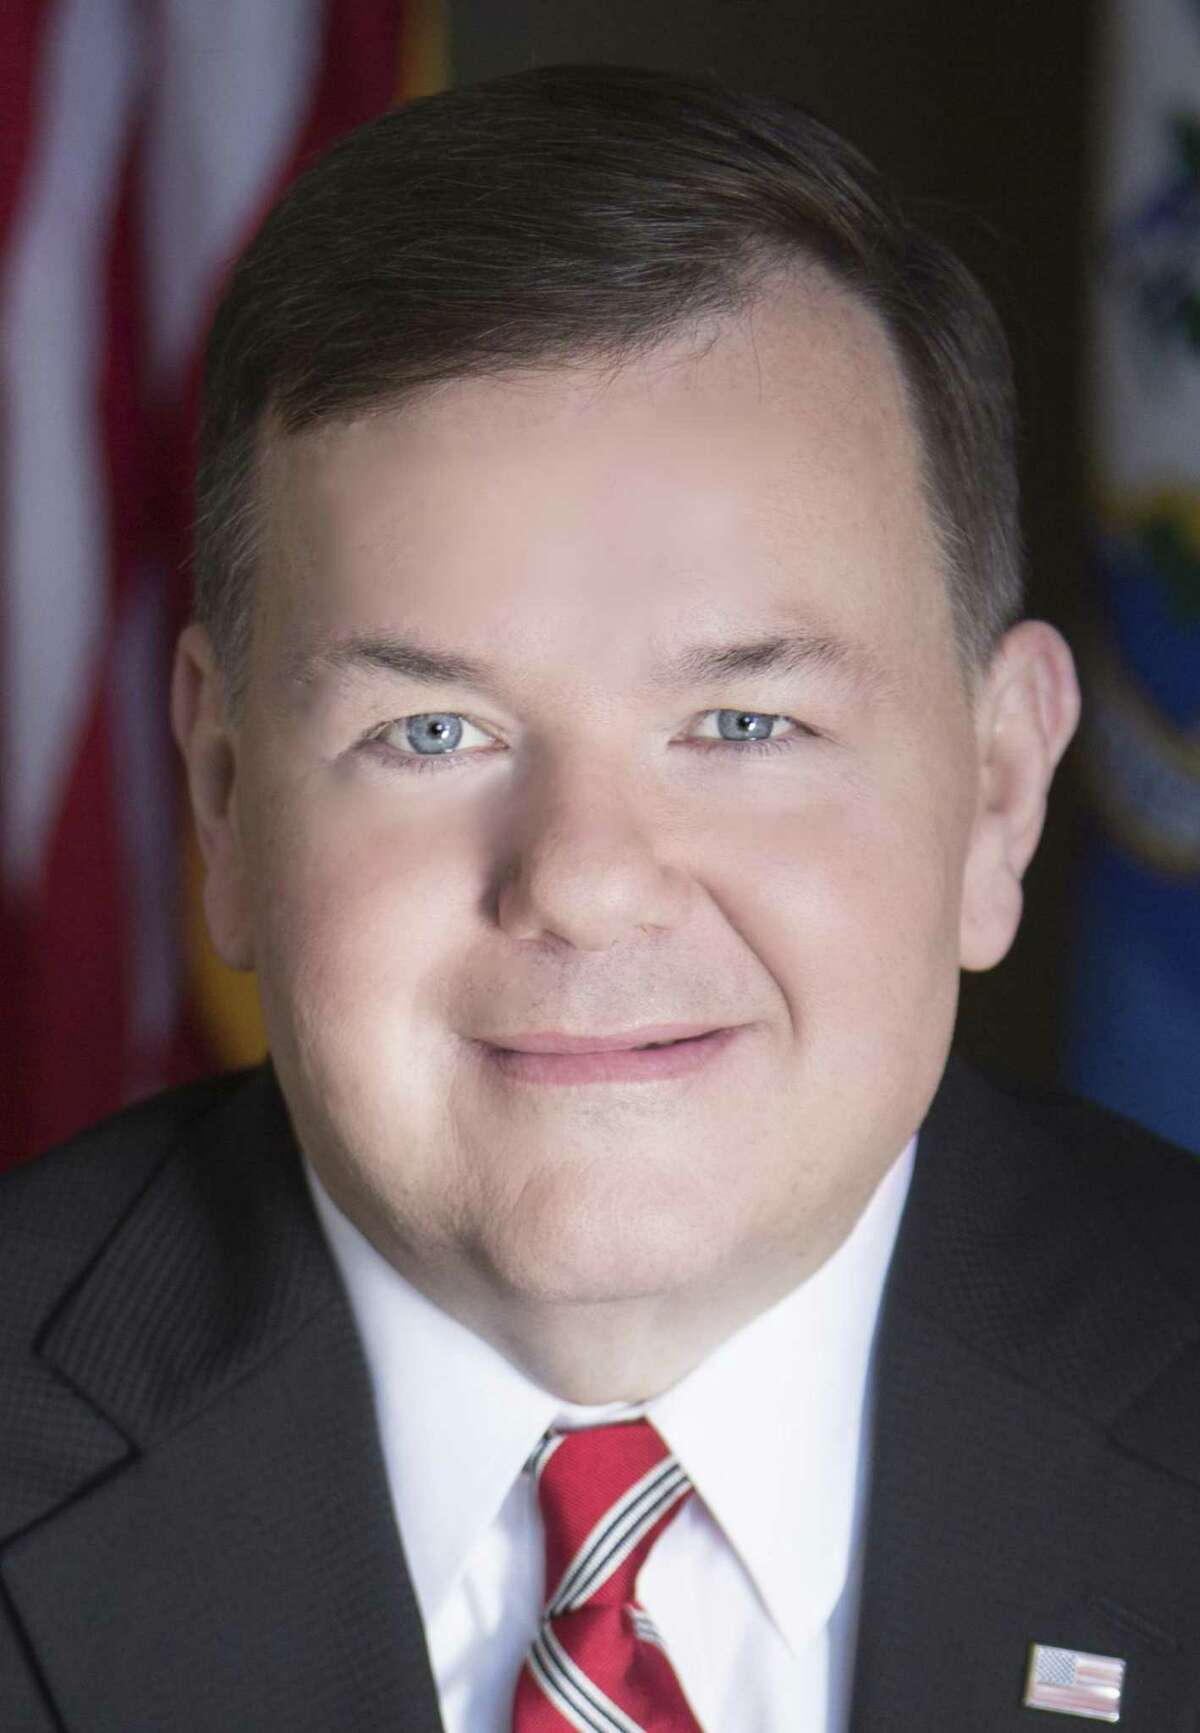 State Rep. John Frey